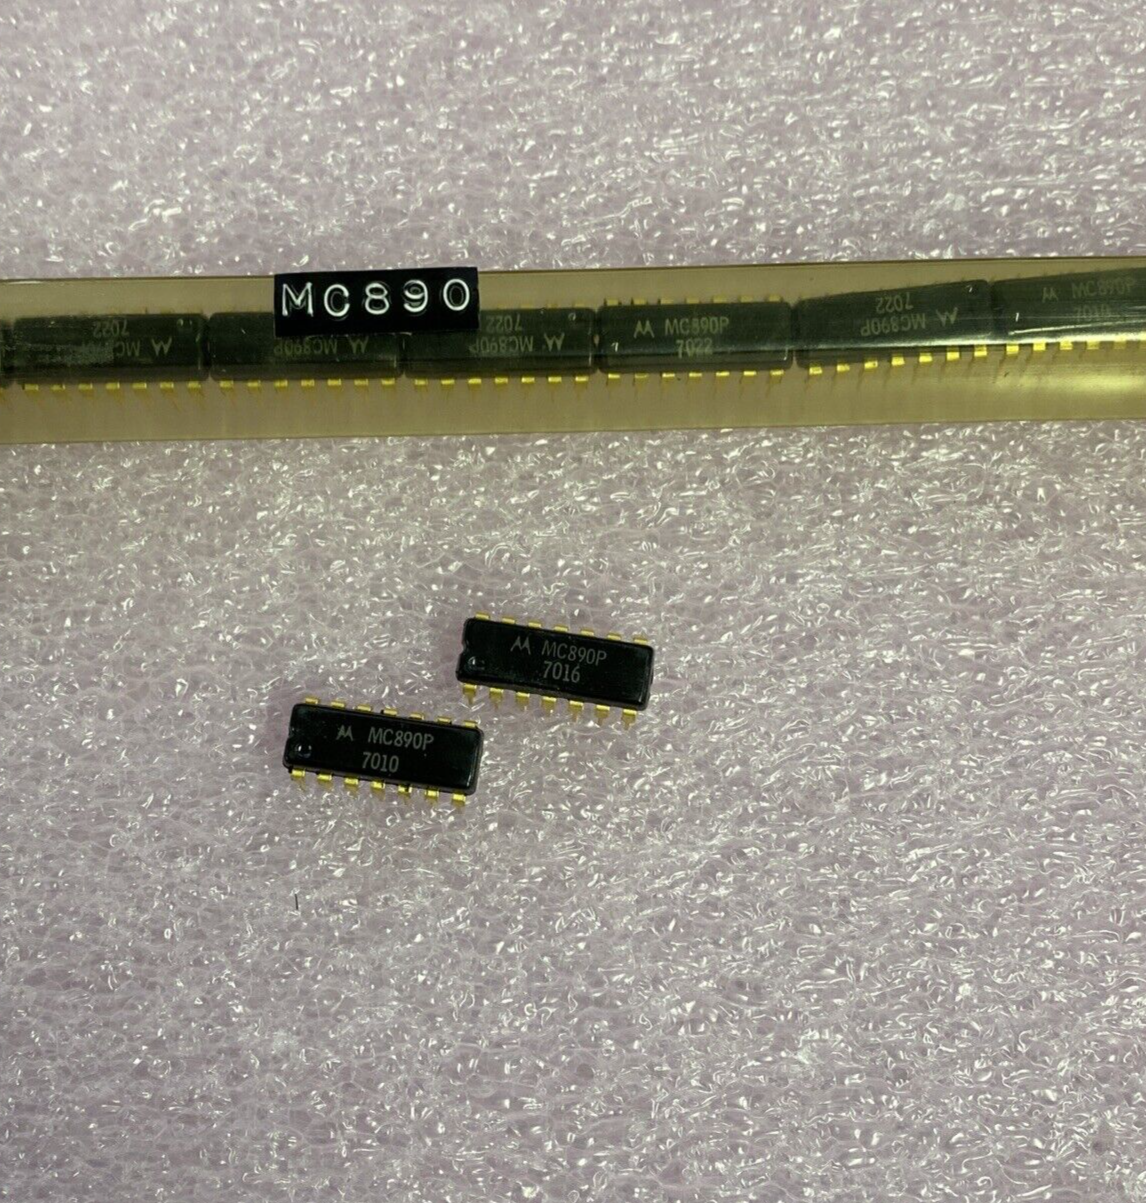 Lot of 13 MC890P MOTOROLA 14 Gold PIN NEW Old Stock